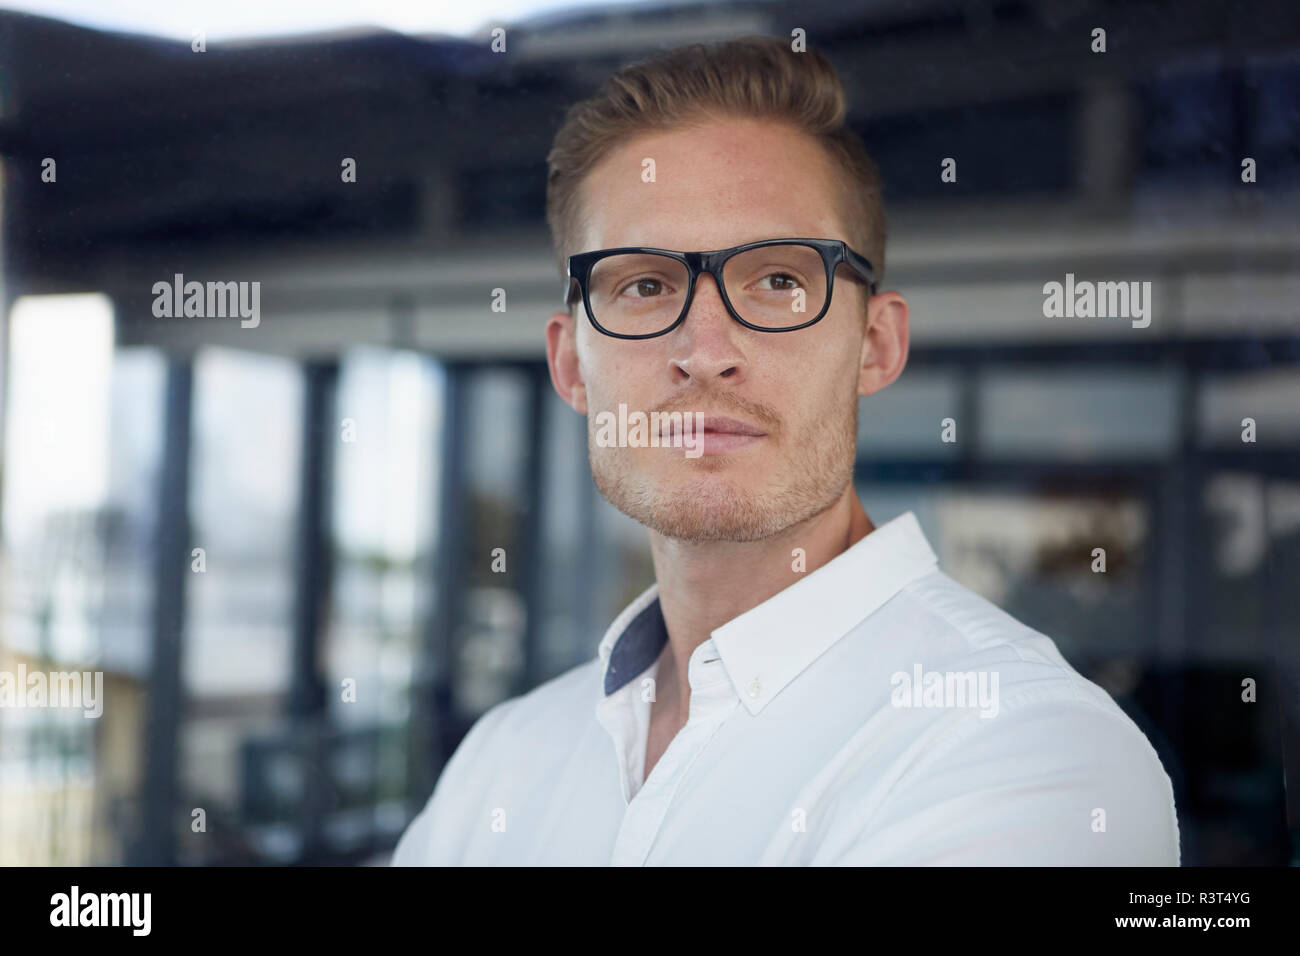 Portrait of confident businessman wearing glasses Stock Photo